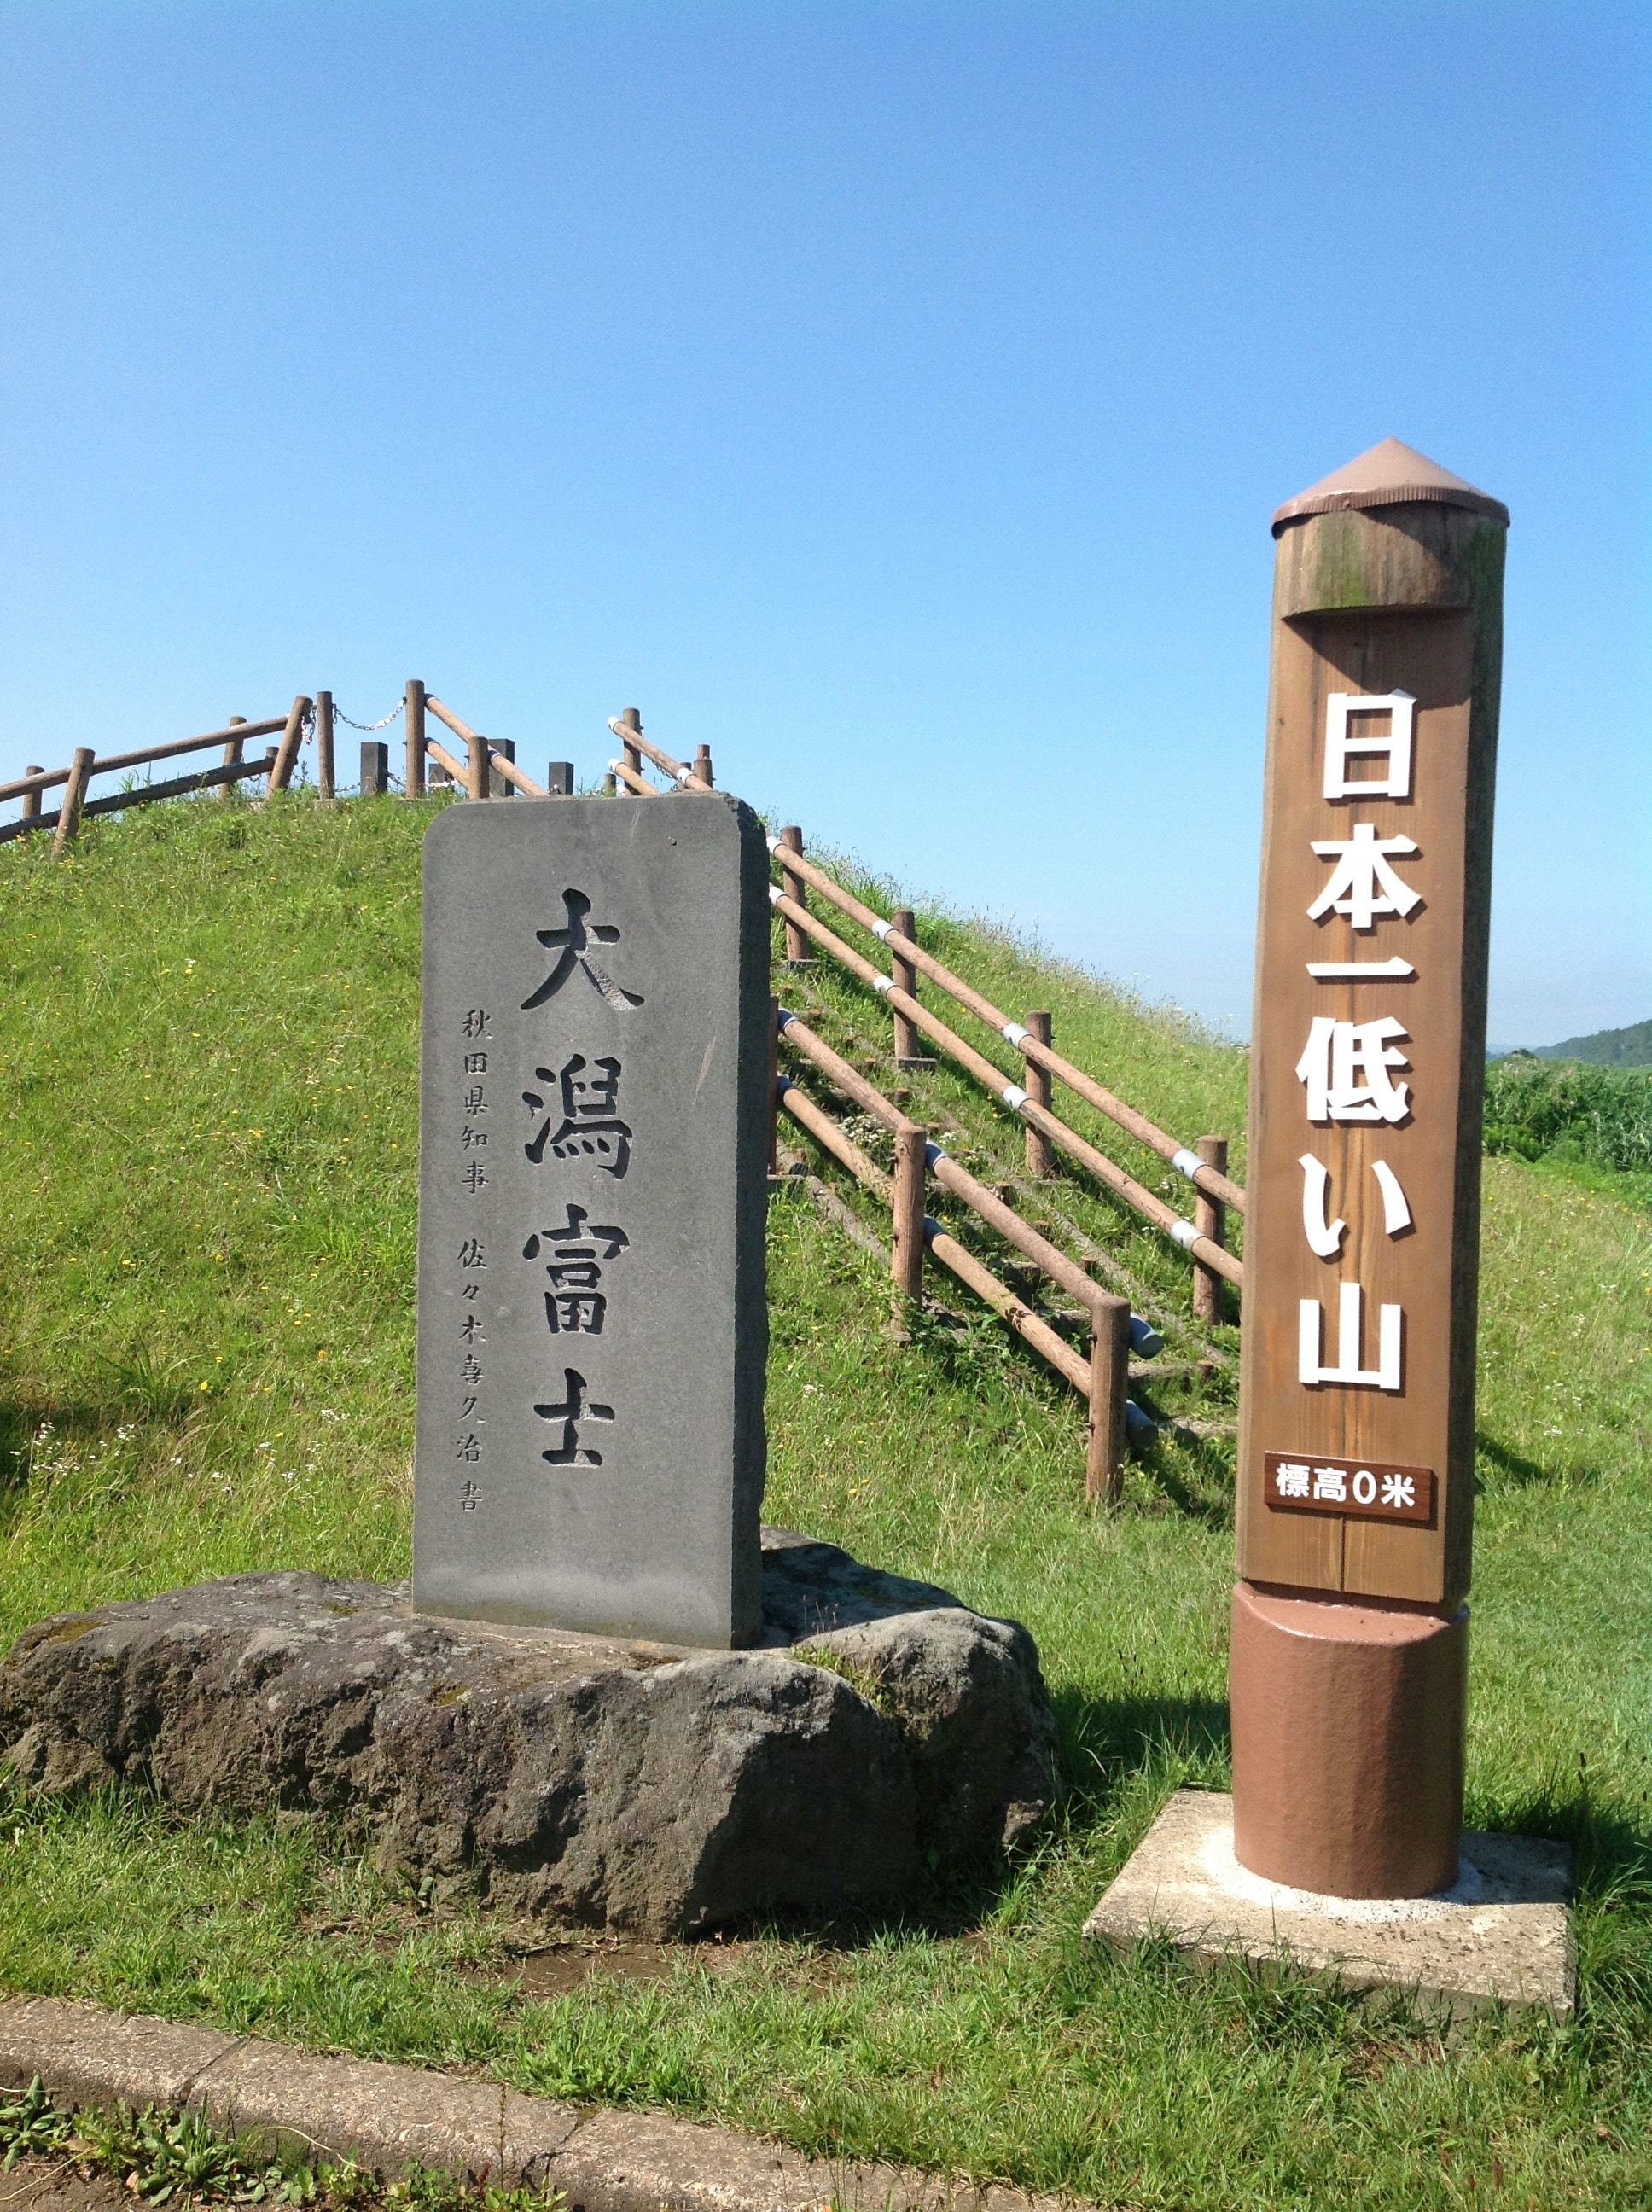 stone kanjin text statue